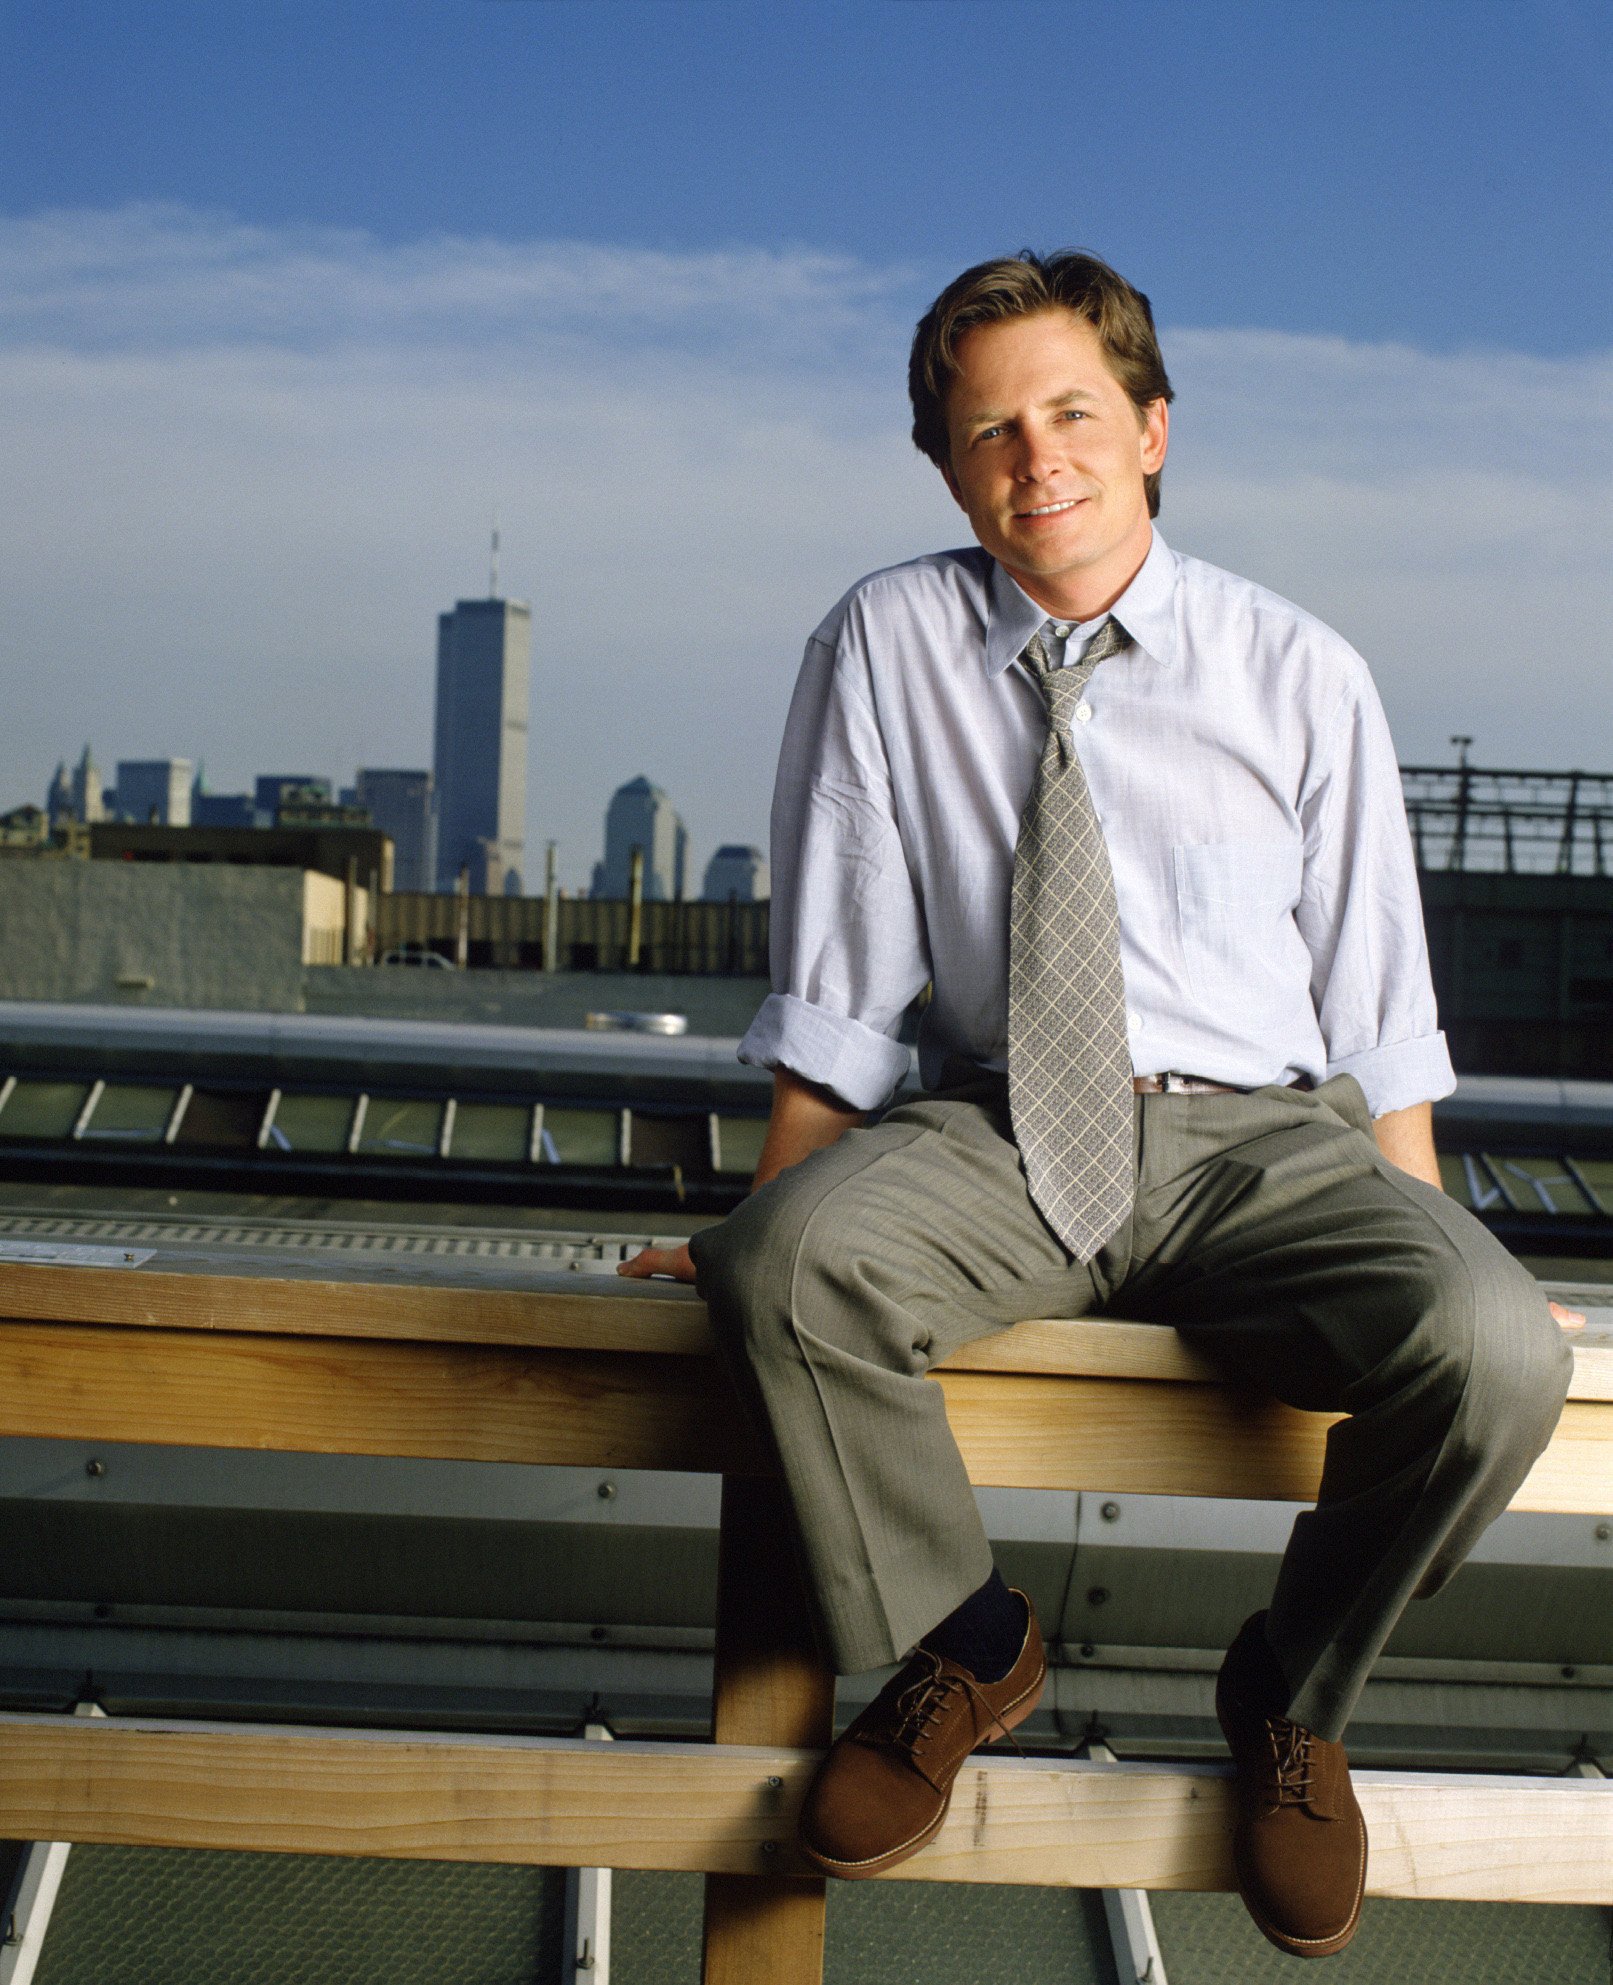 Michael J. Fox dans "Spin City", 1996 | Source : Getty Images